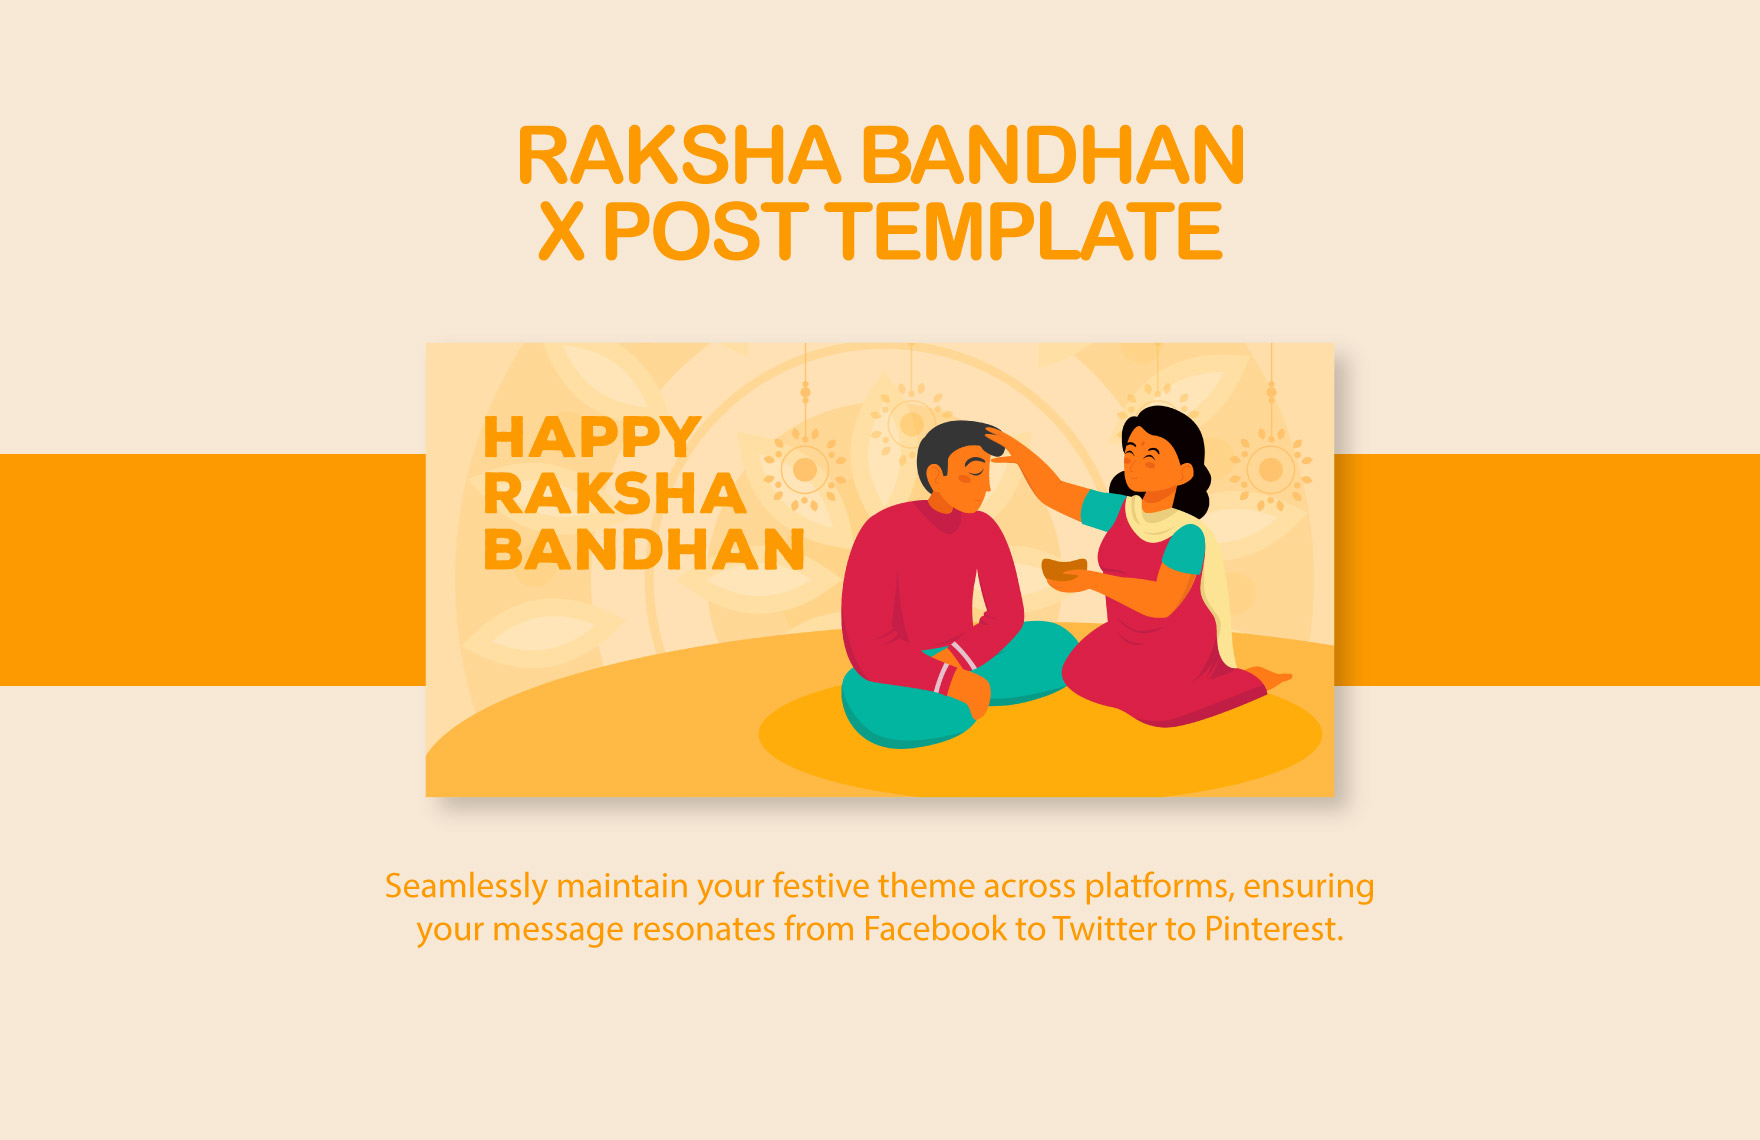 Free Raksha Bandhan X Post Template in Illustrator, PSD, PNG